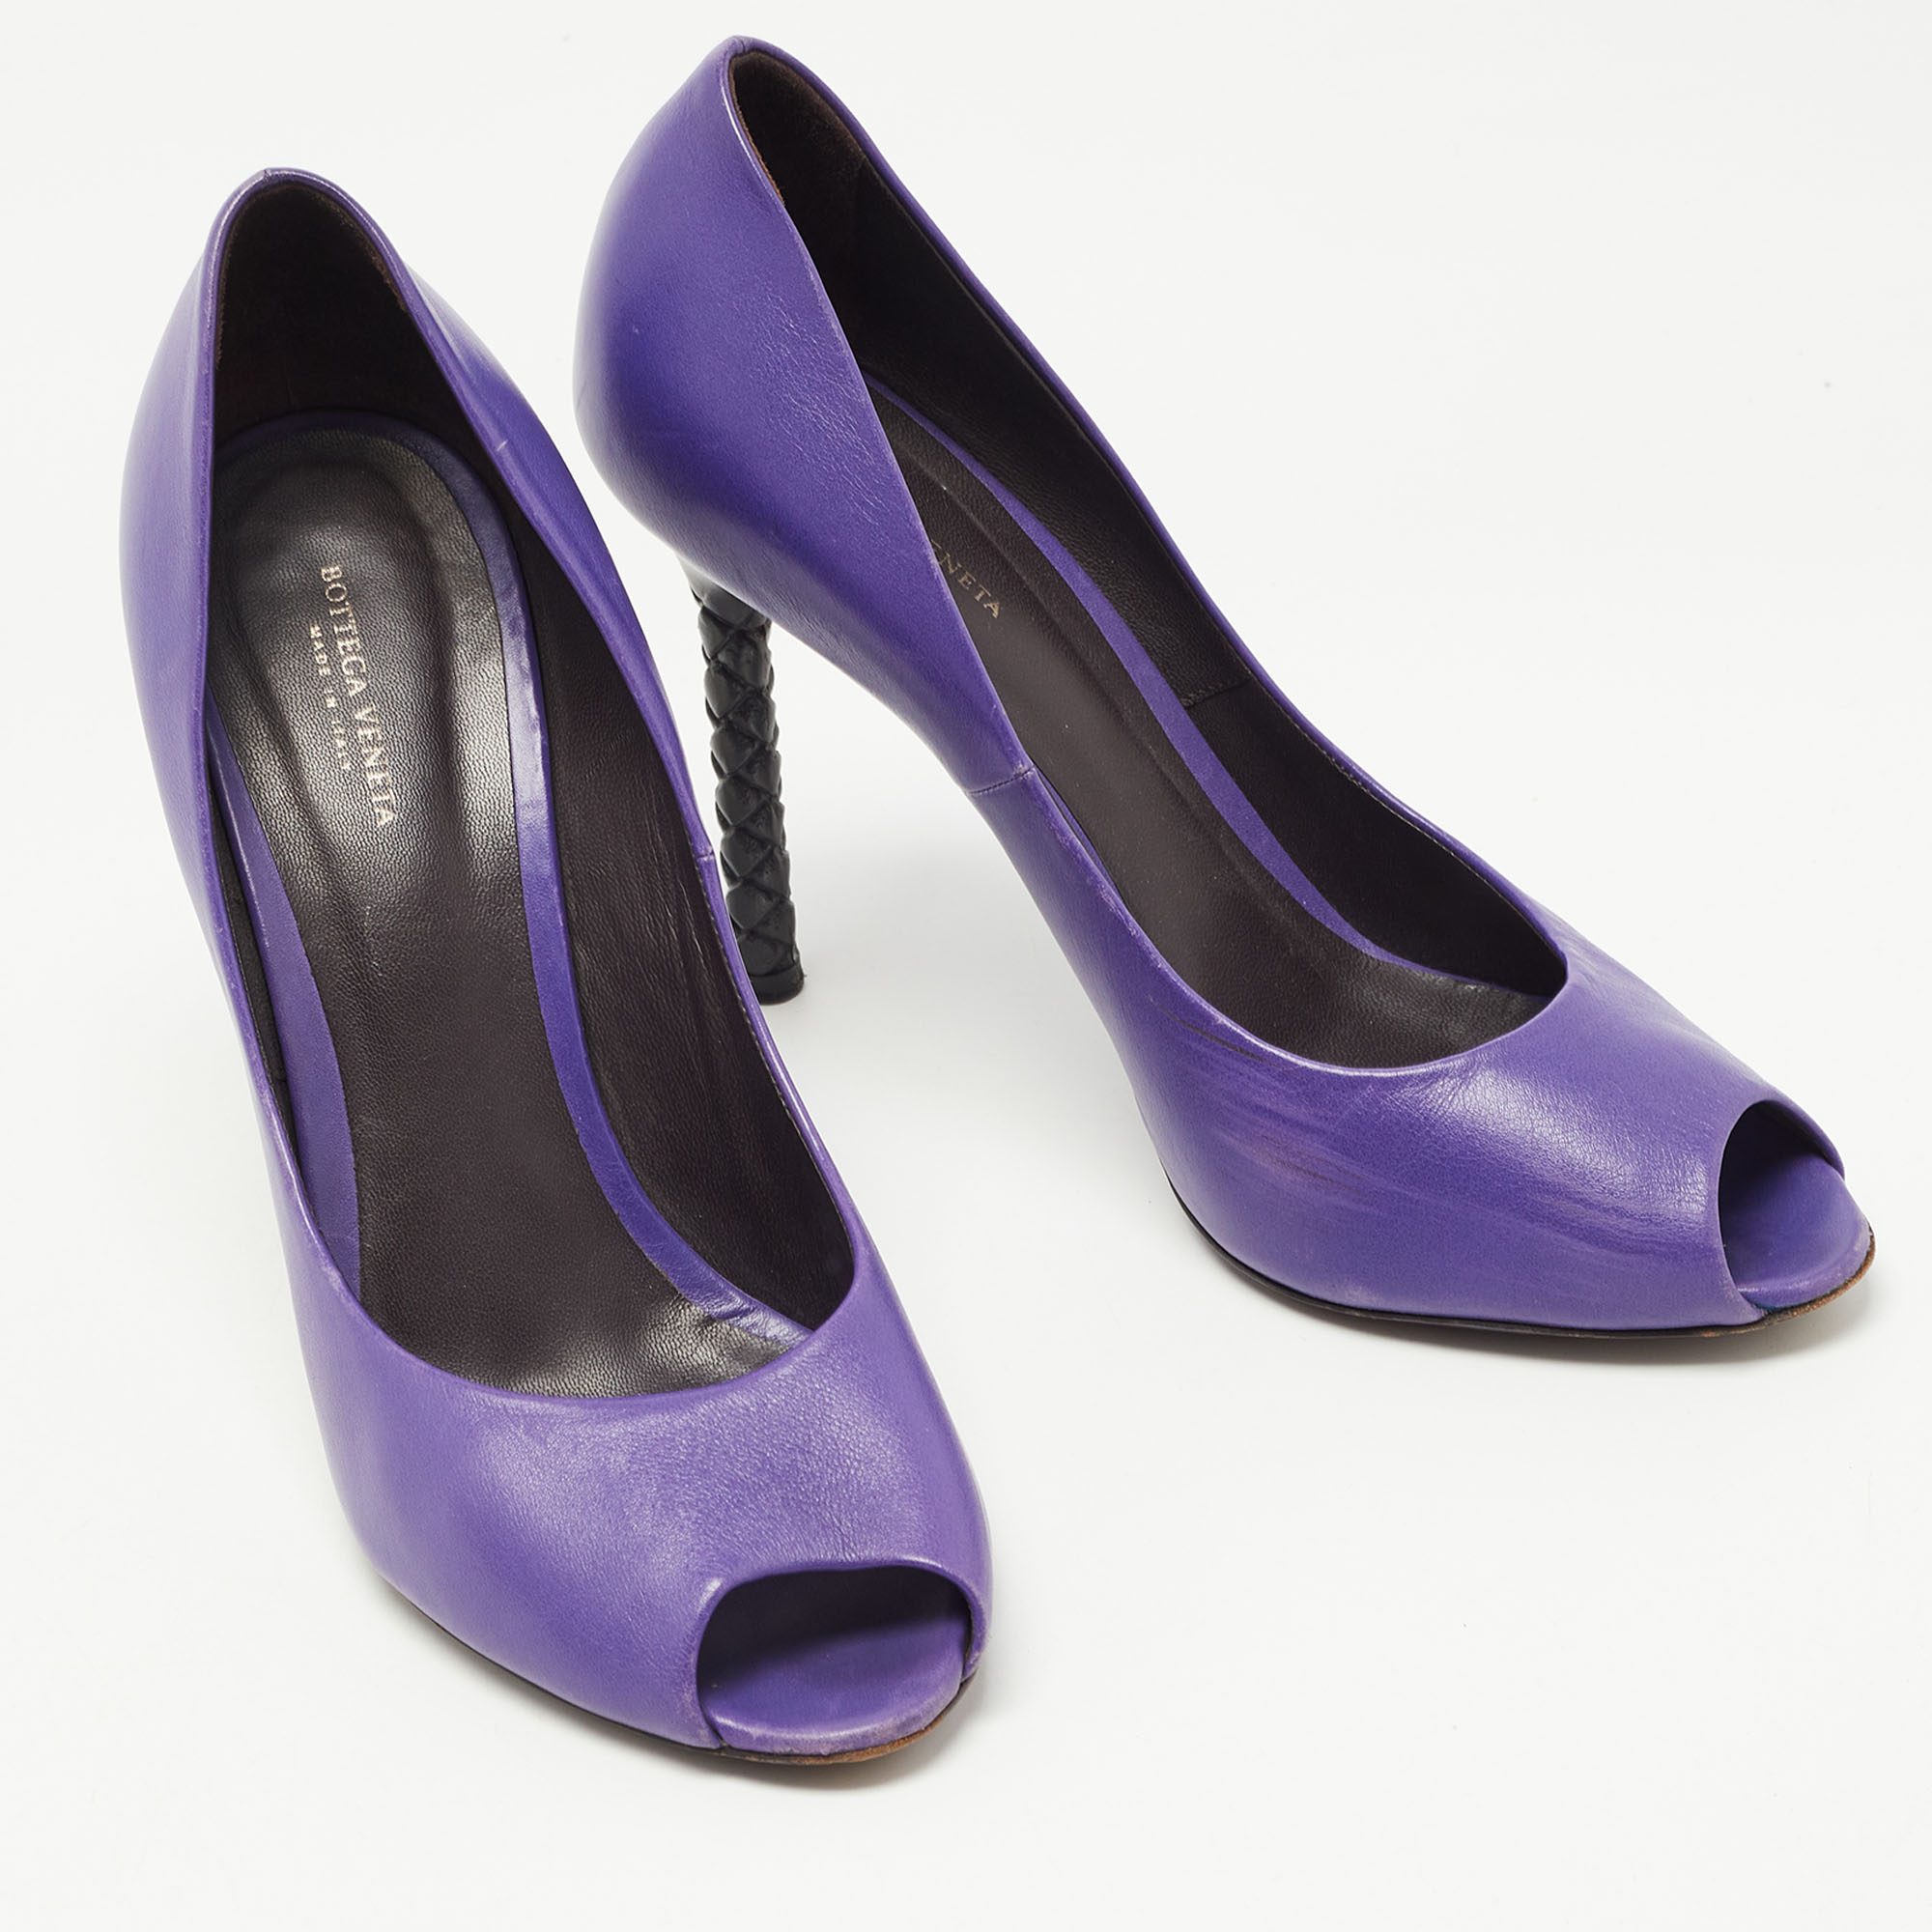 Bottega Veneta Purple Suede Peep Toe Pumps Size 39.5